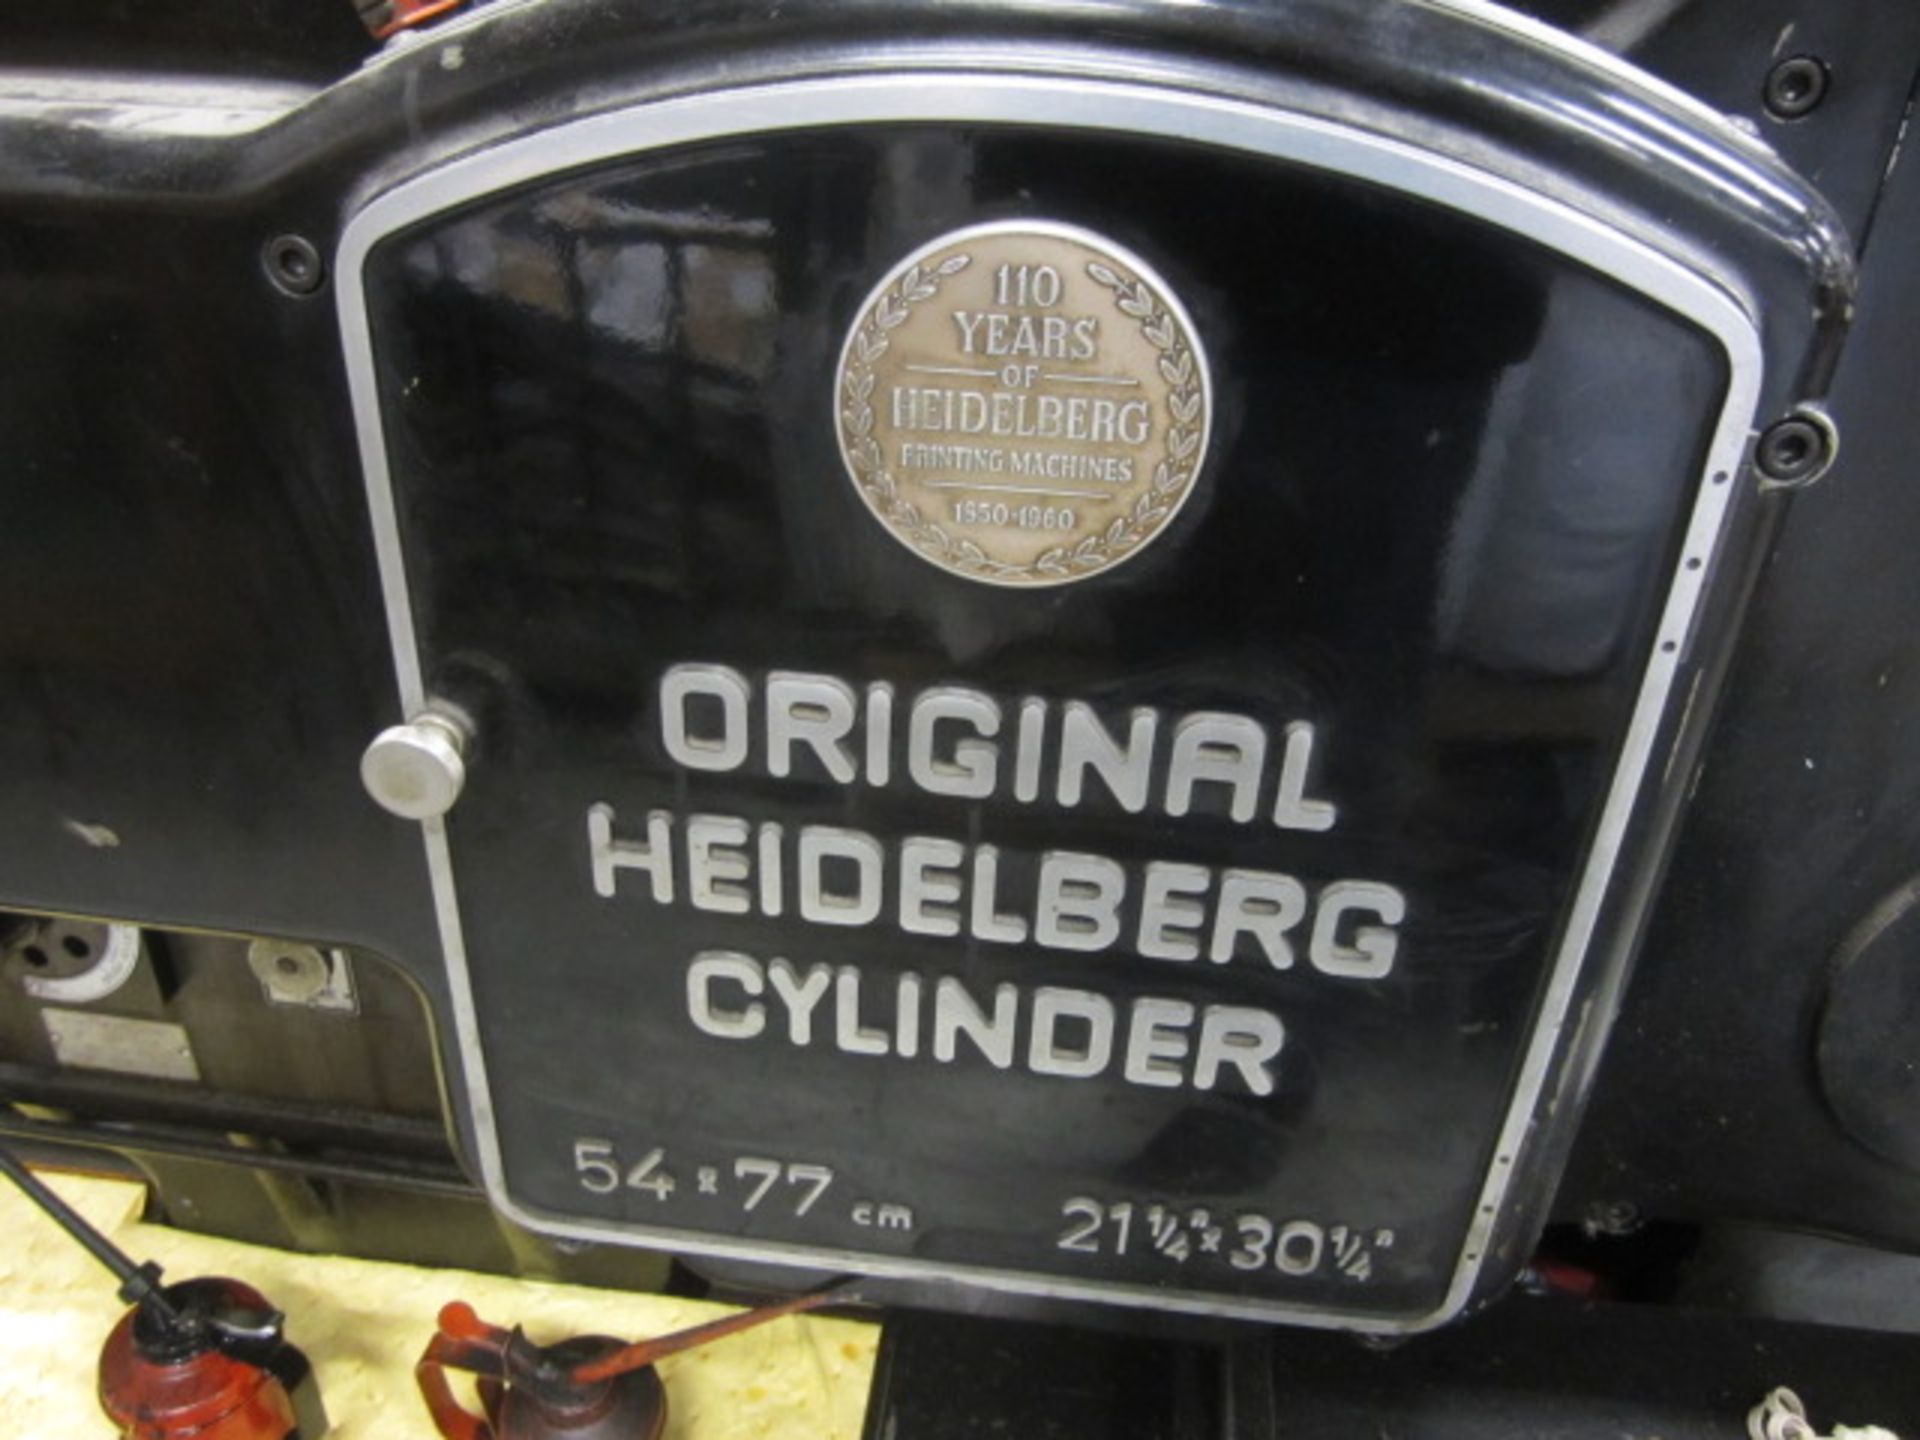 Original Heidelberg cylinder press, 54 x 77cm x 211/4" x 301/4" (Please note: A work Method... - Image 5 of 5